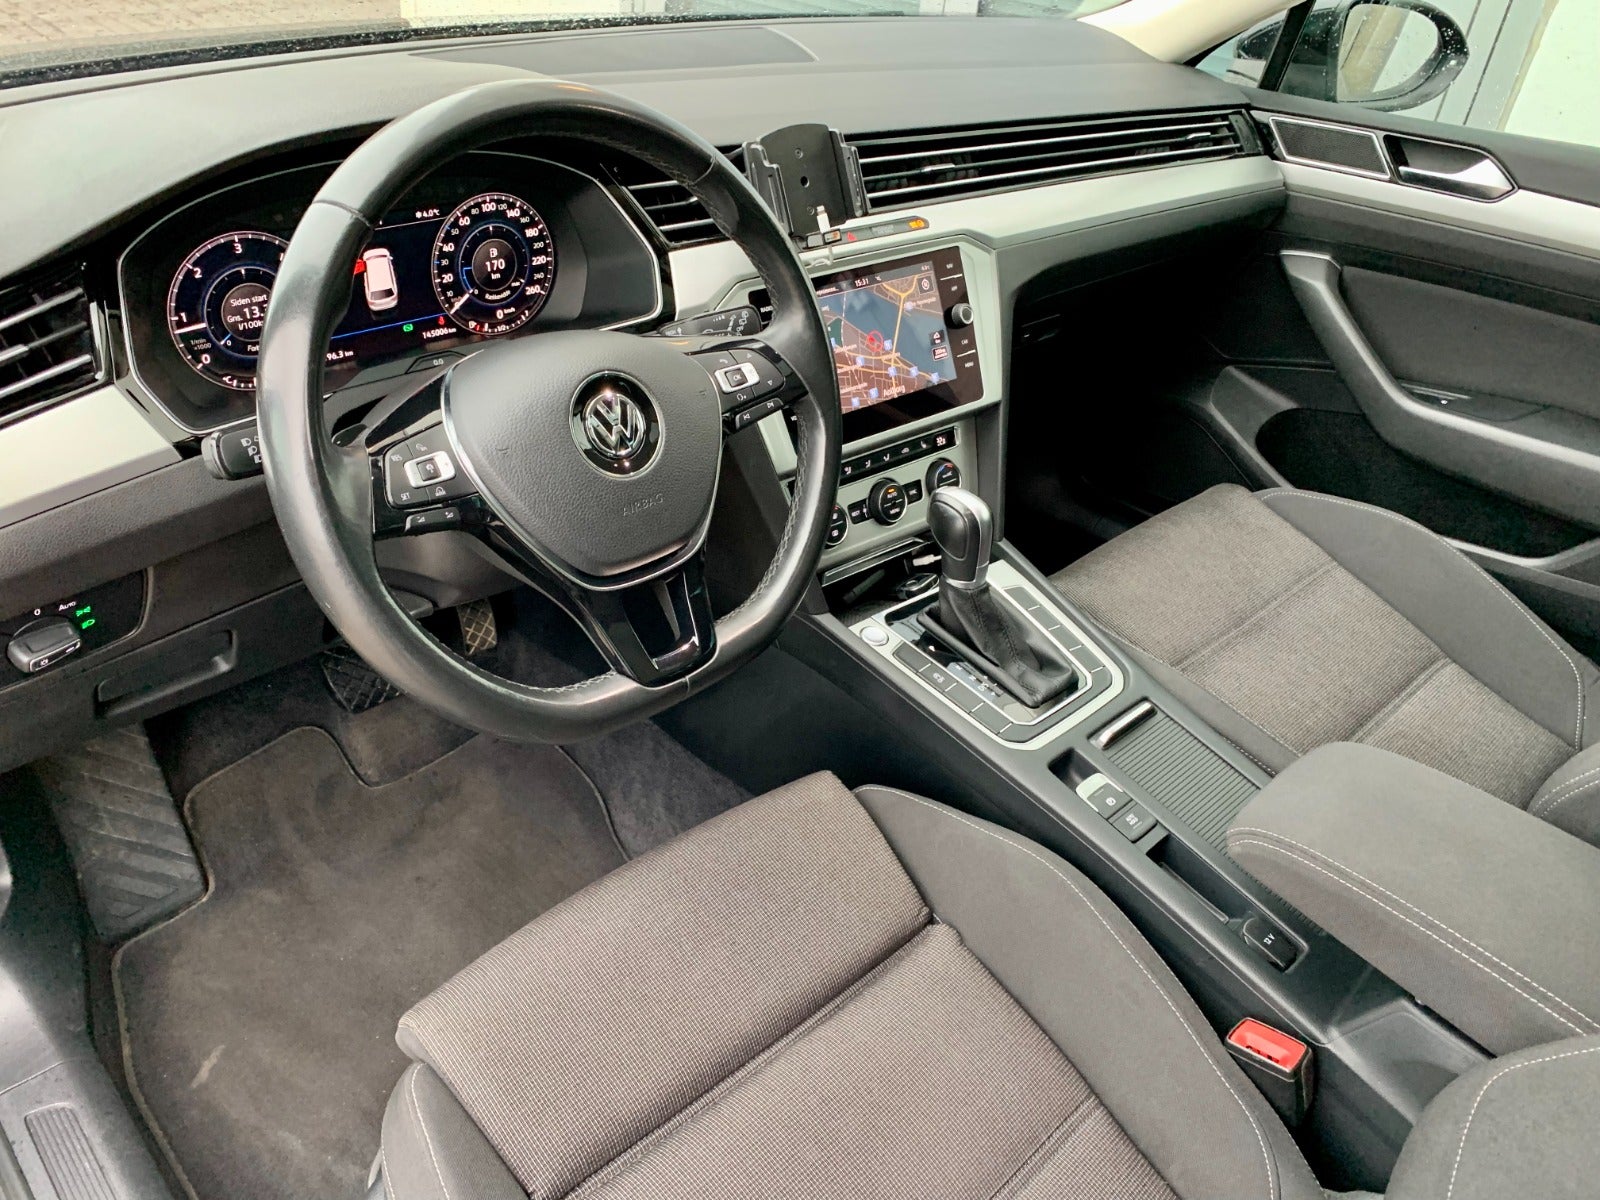 VW Passat 2,0 TDi 150 Comfortline Variant DSG